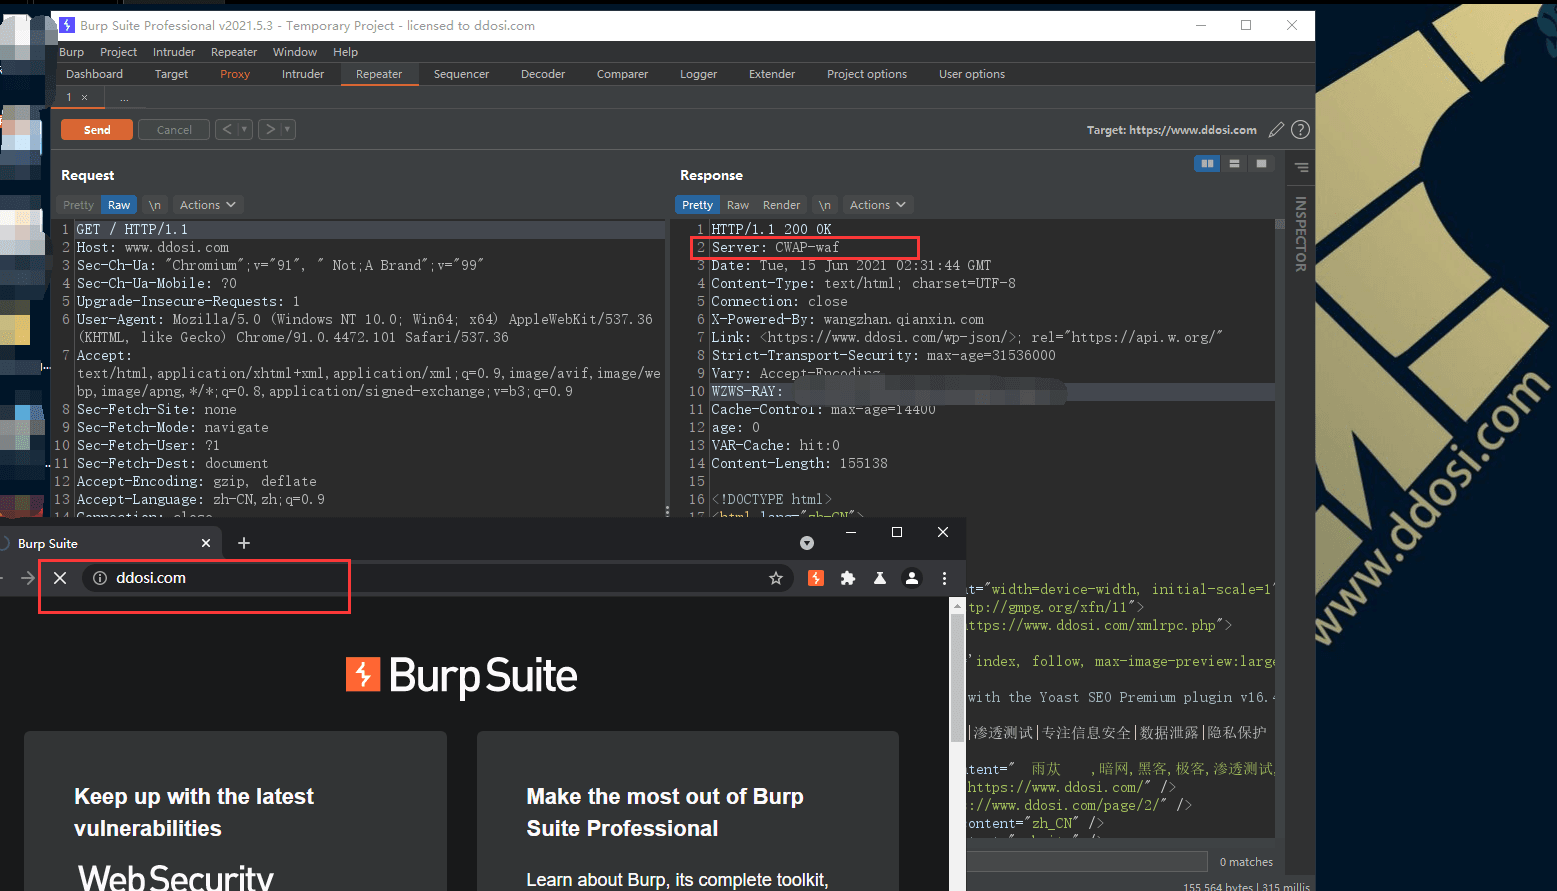 BurpSuite2021.5.3破解版下载build8265 cracked